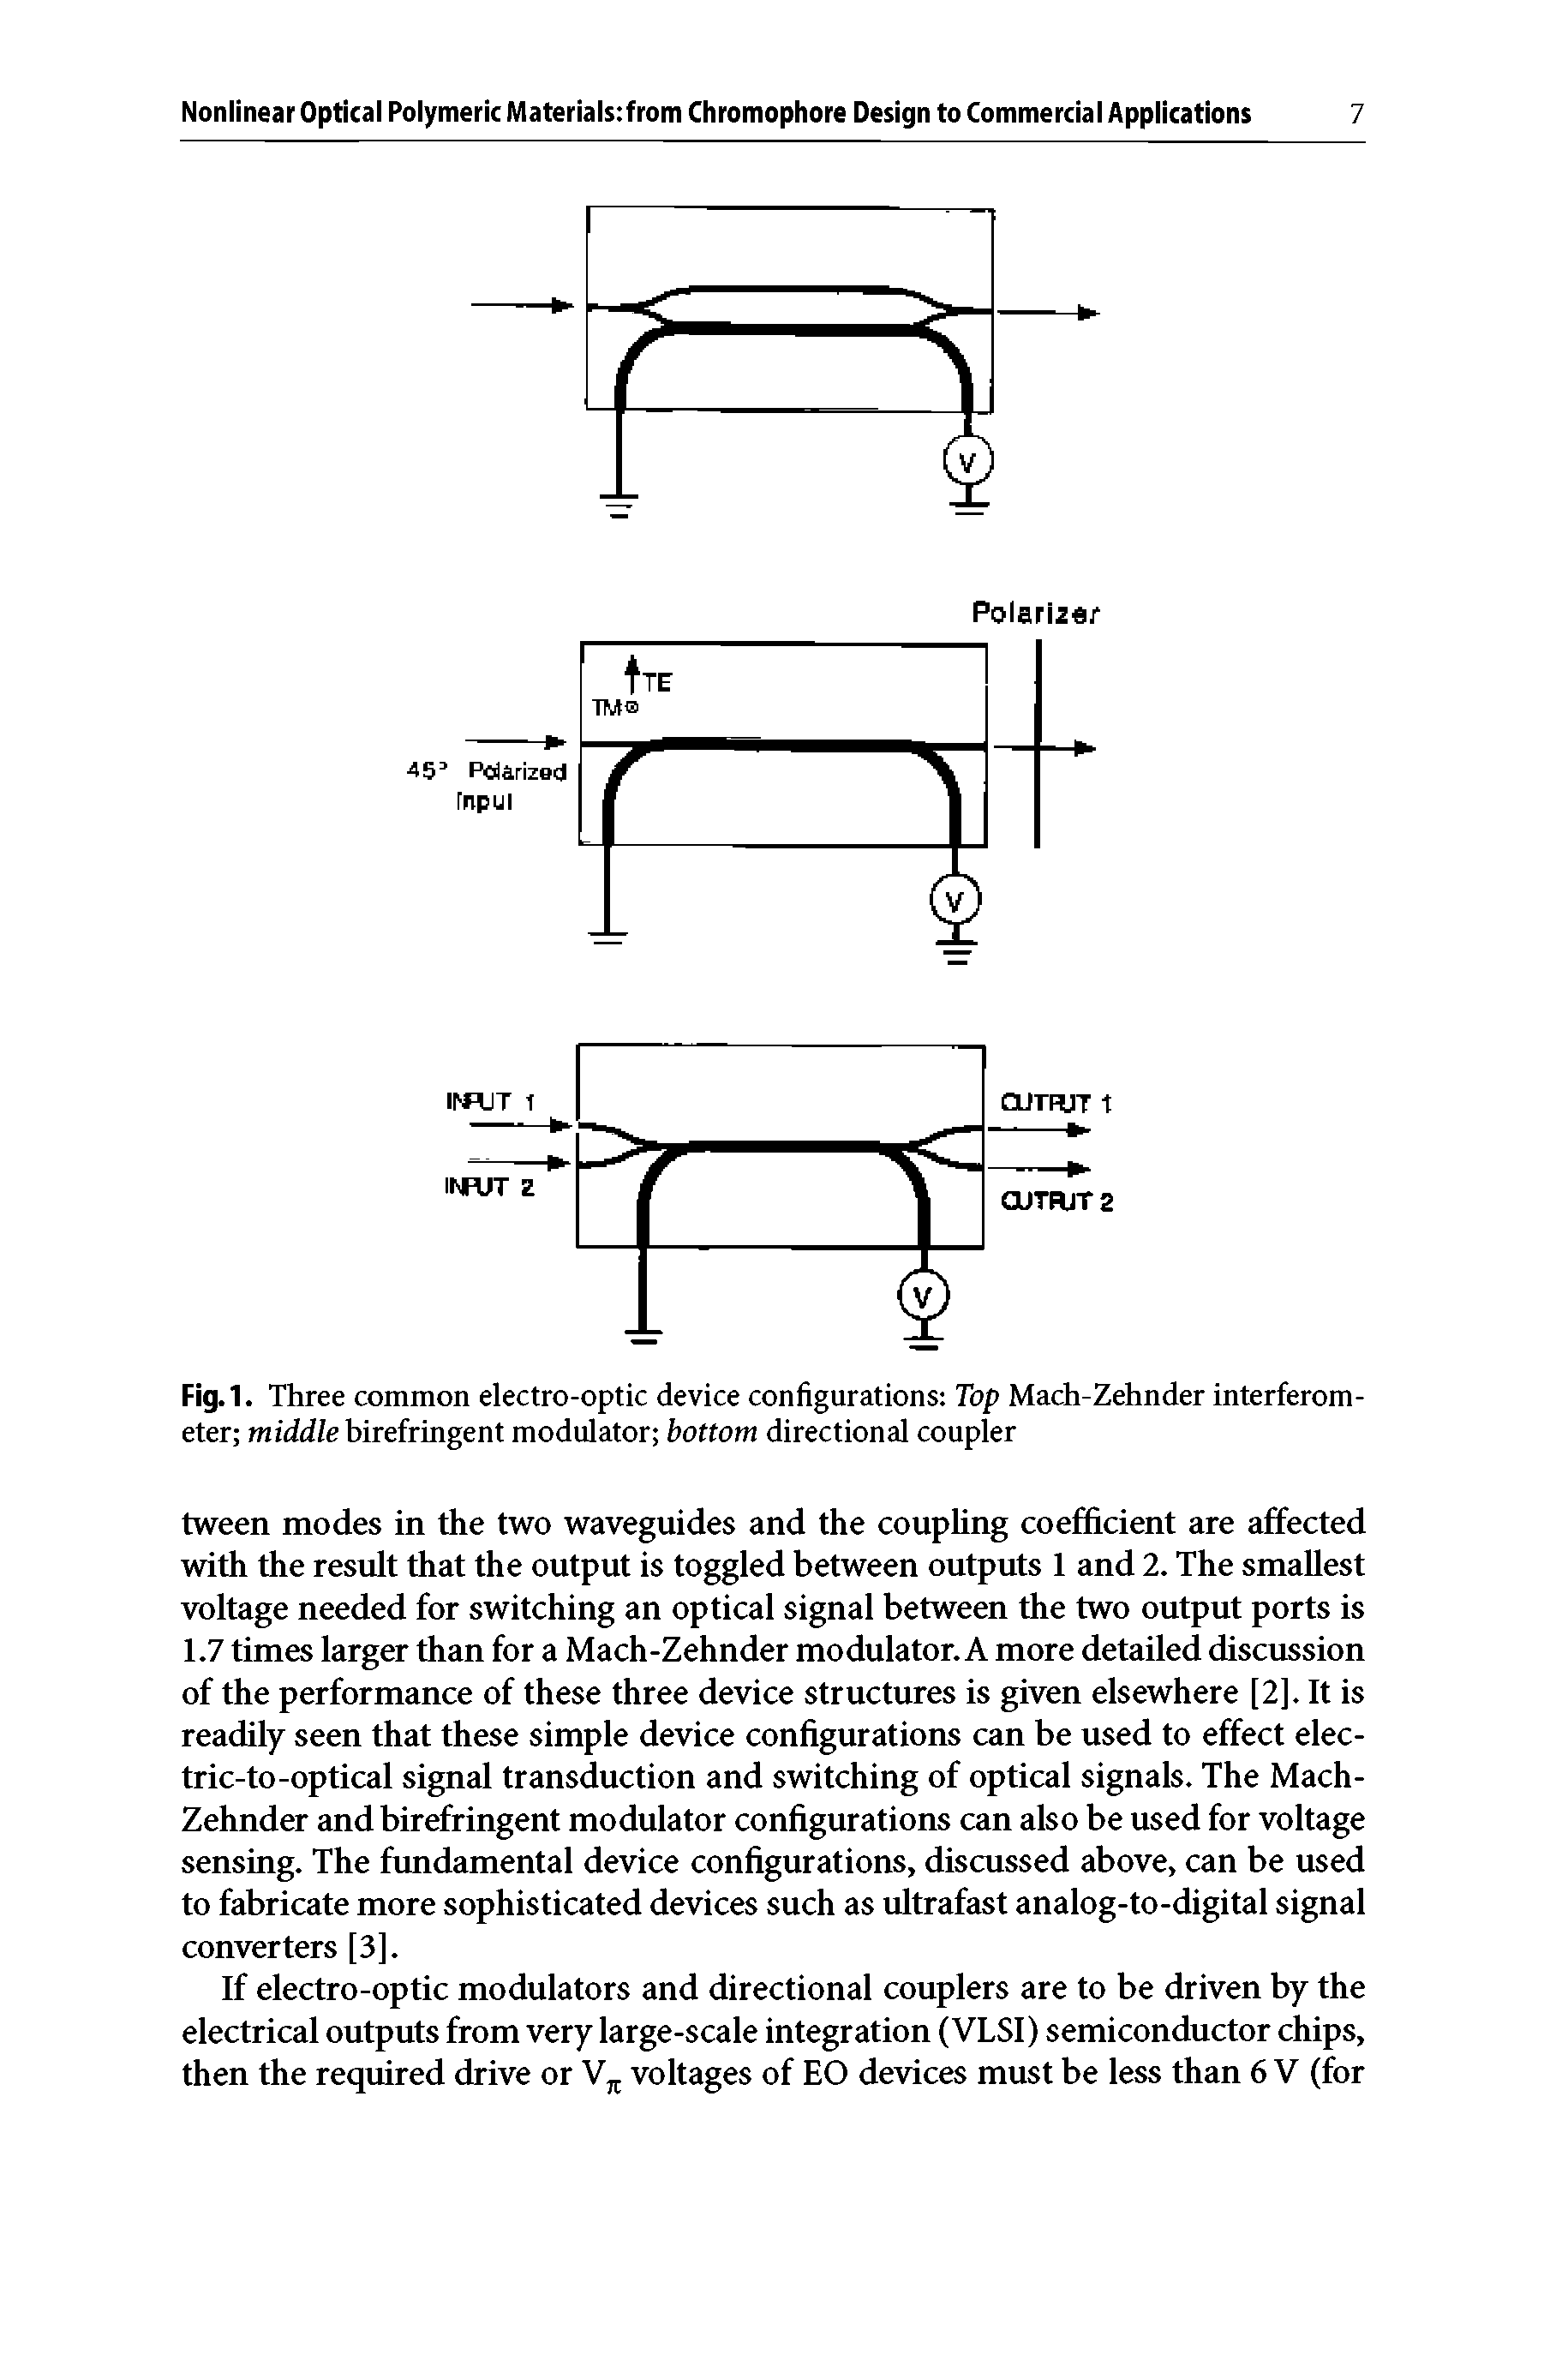 Fig. 1 - Three common electro-optic device configurations Top Mach-Zehnder interferometer middle birefringent modulator bottom directional coupler...